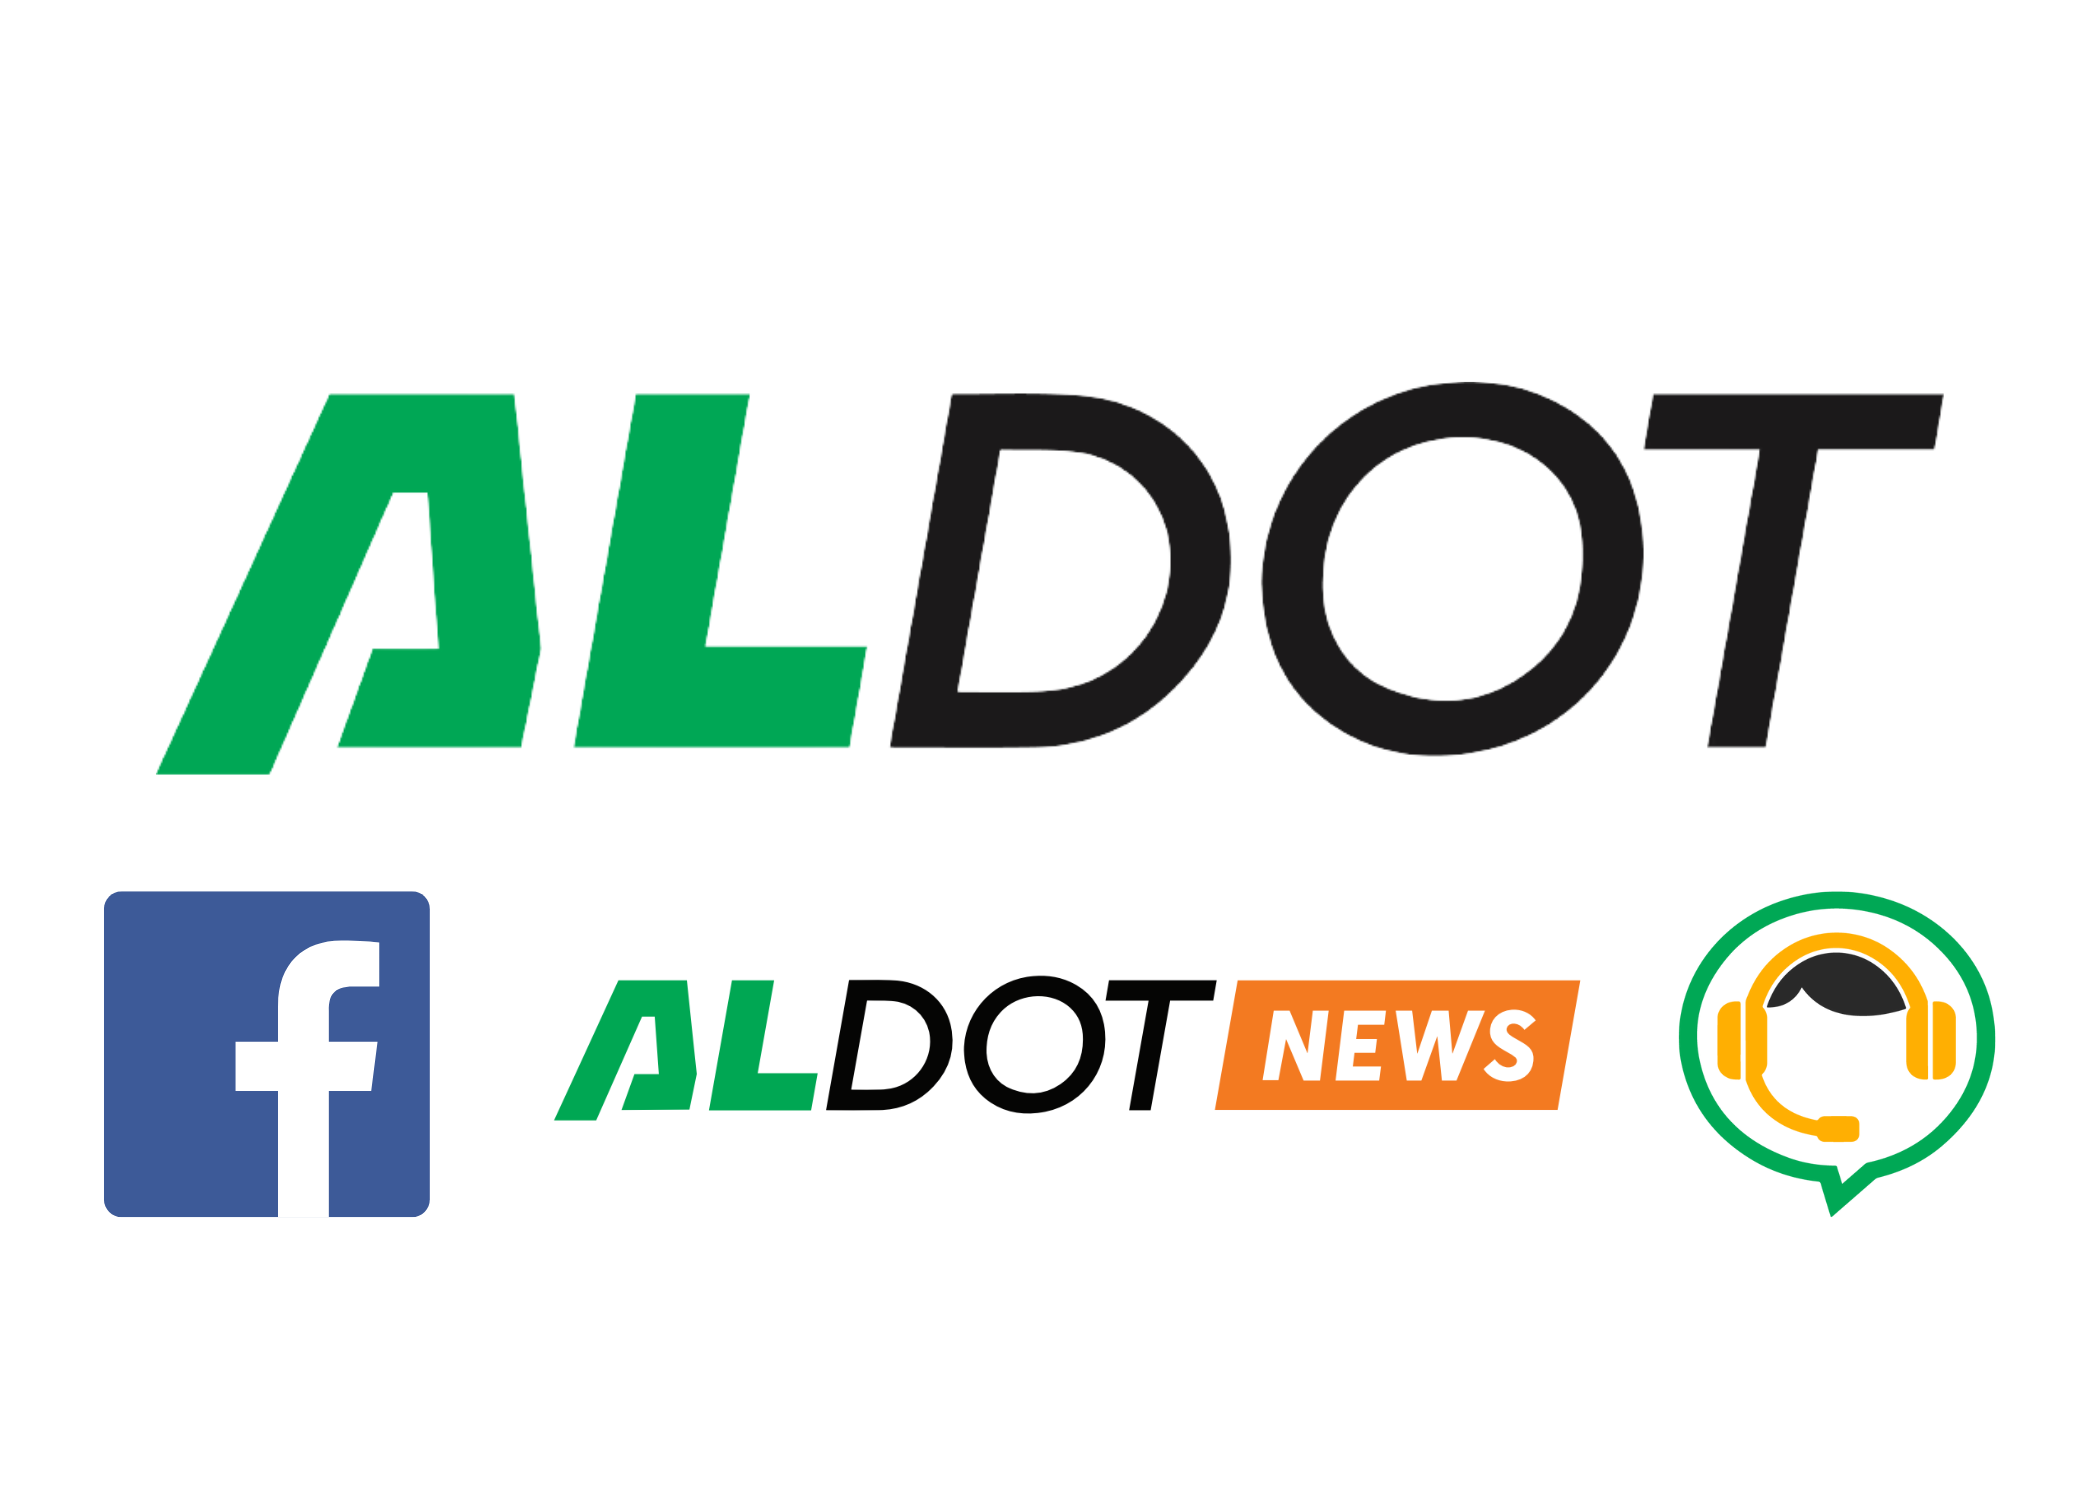 ALDOT logo with facebook logo, ALDOTNews logo, and report a concern logo below